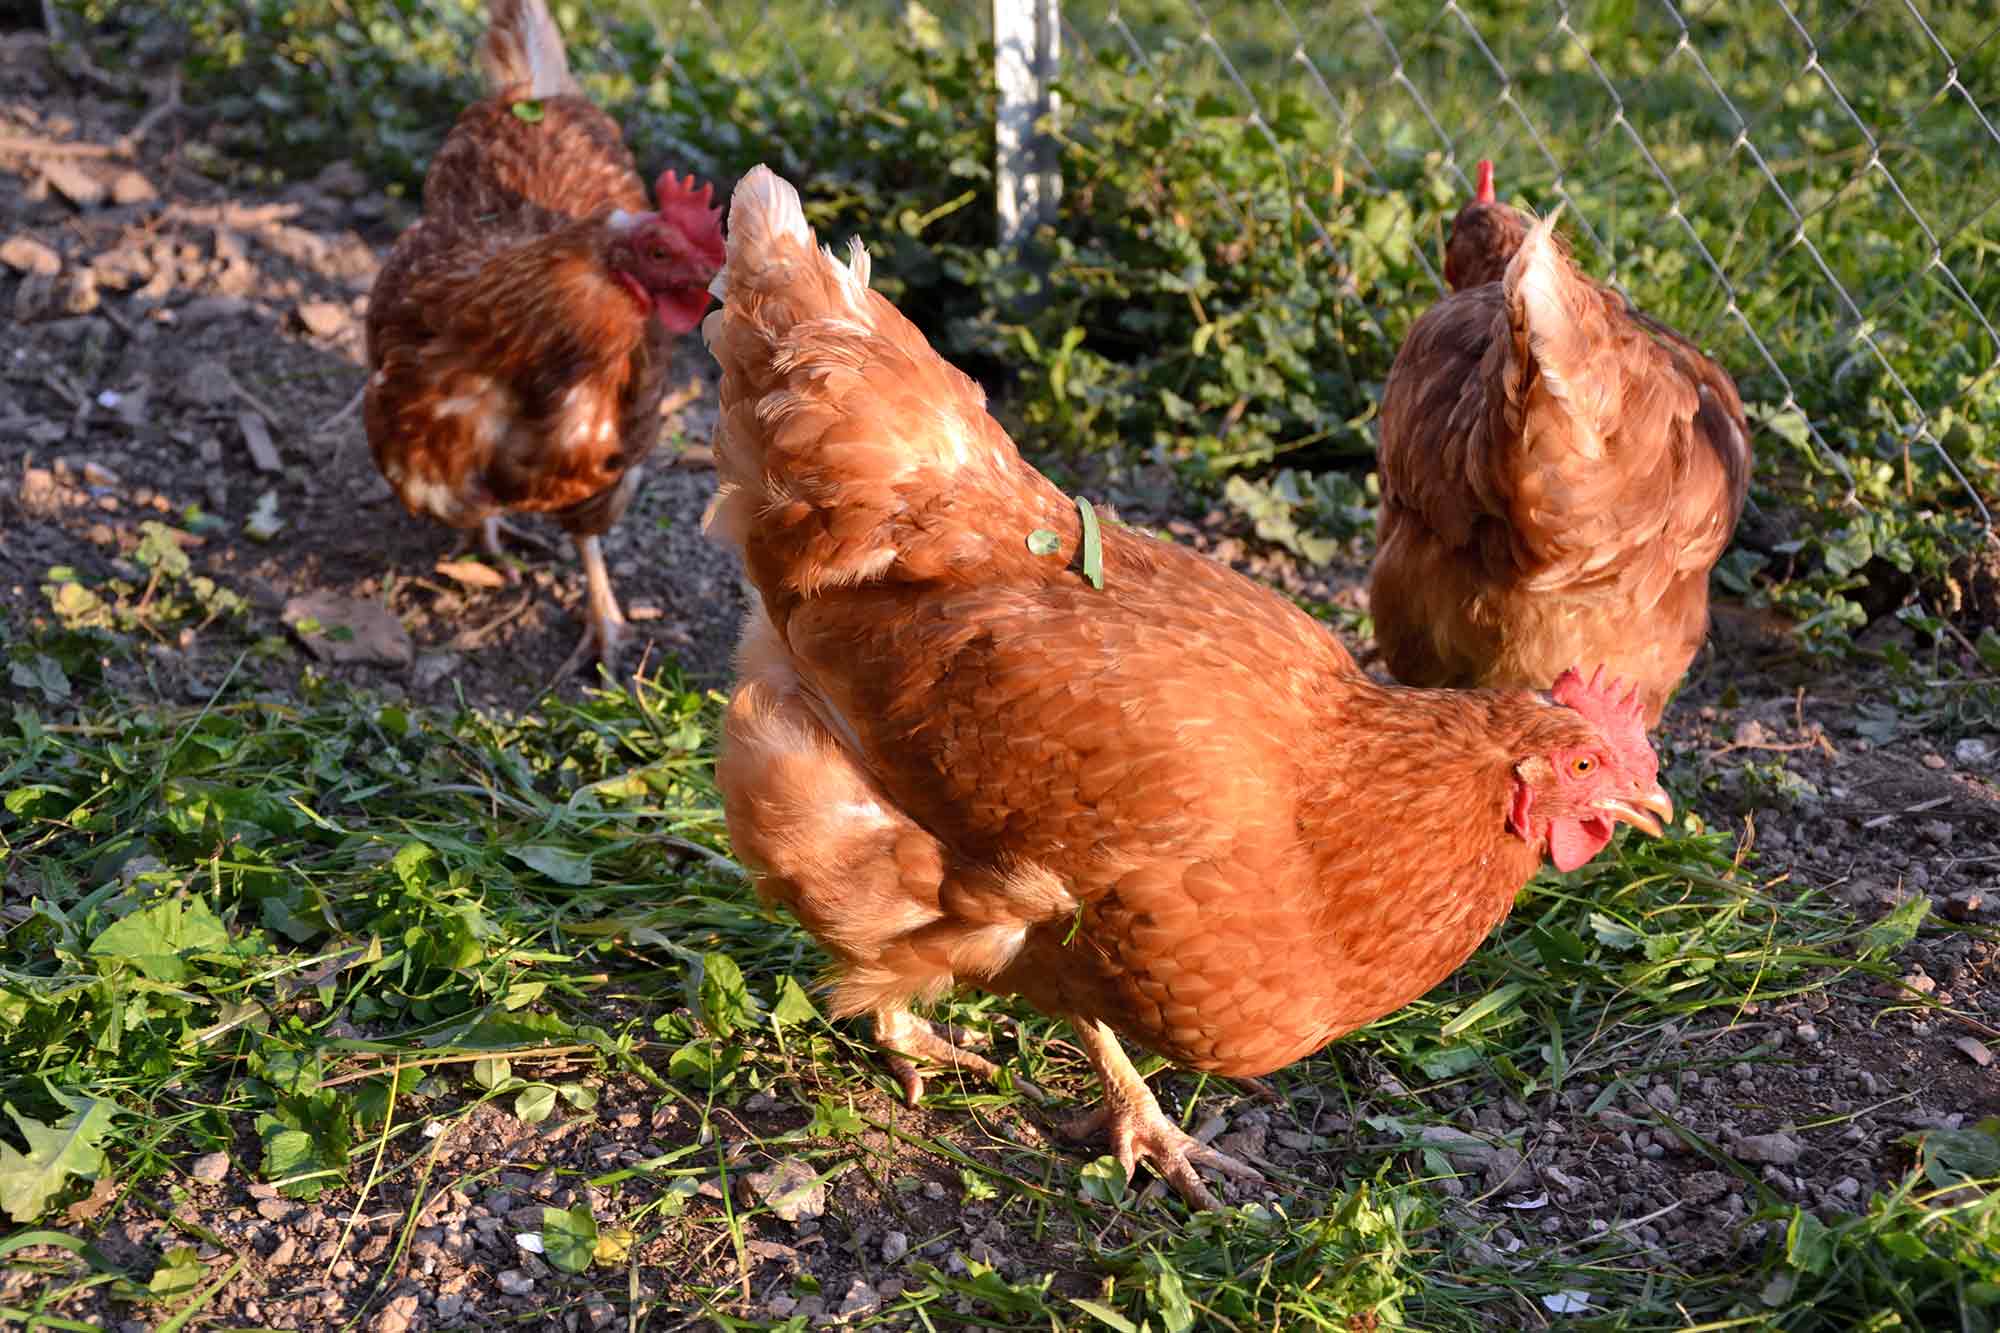 Chicks on the organic mountain farm